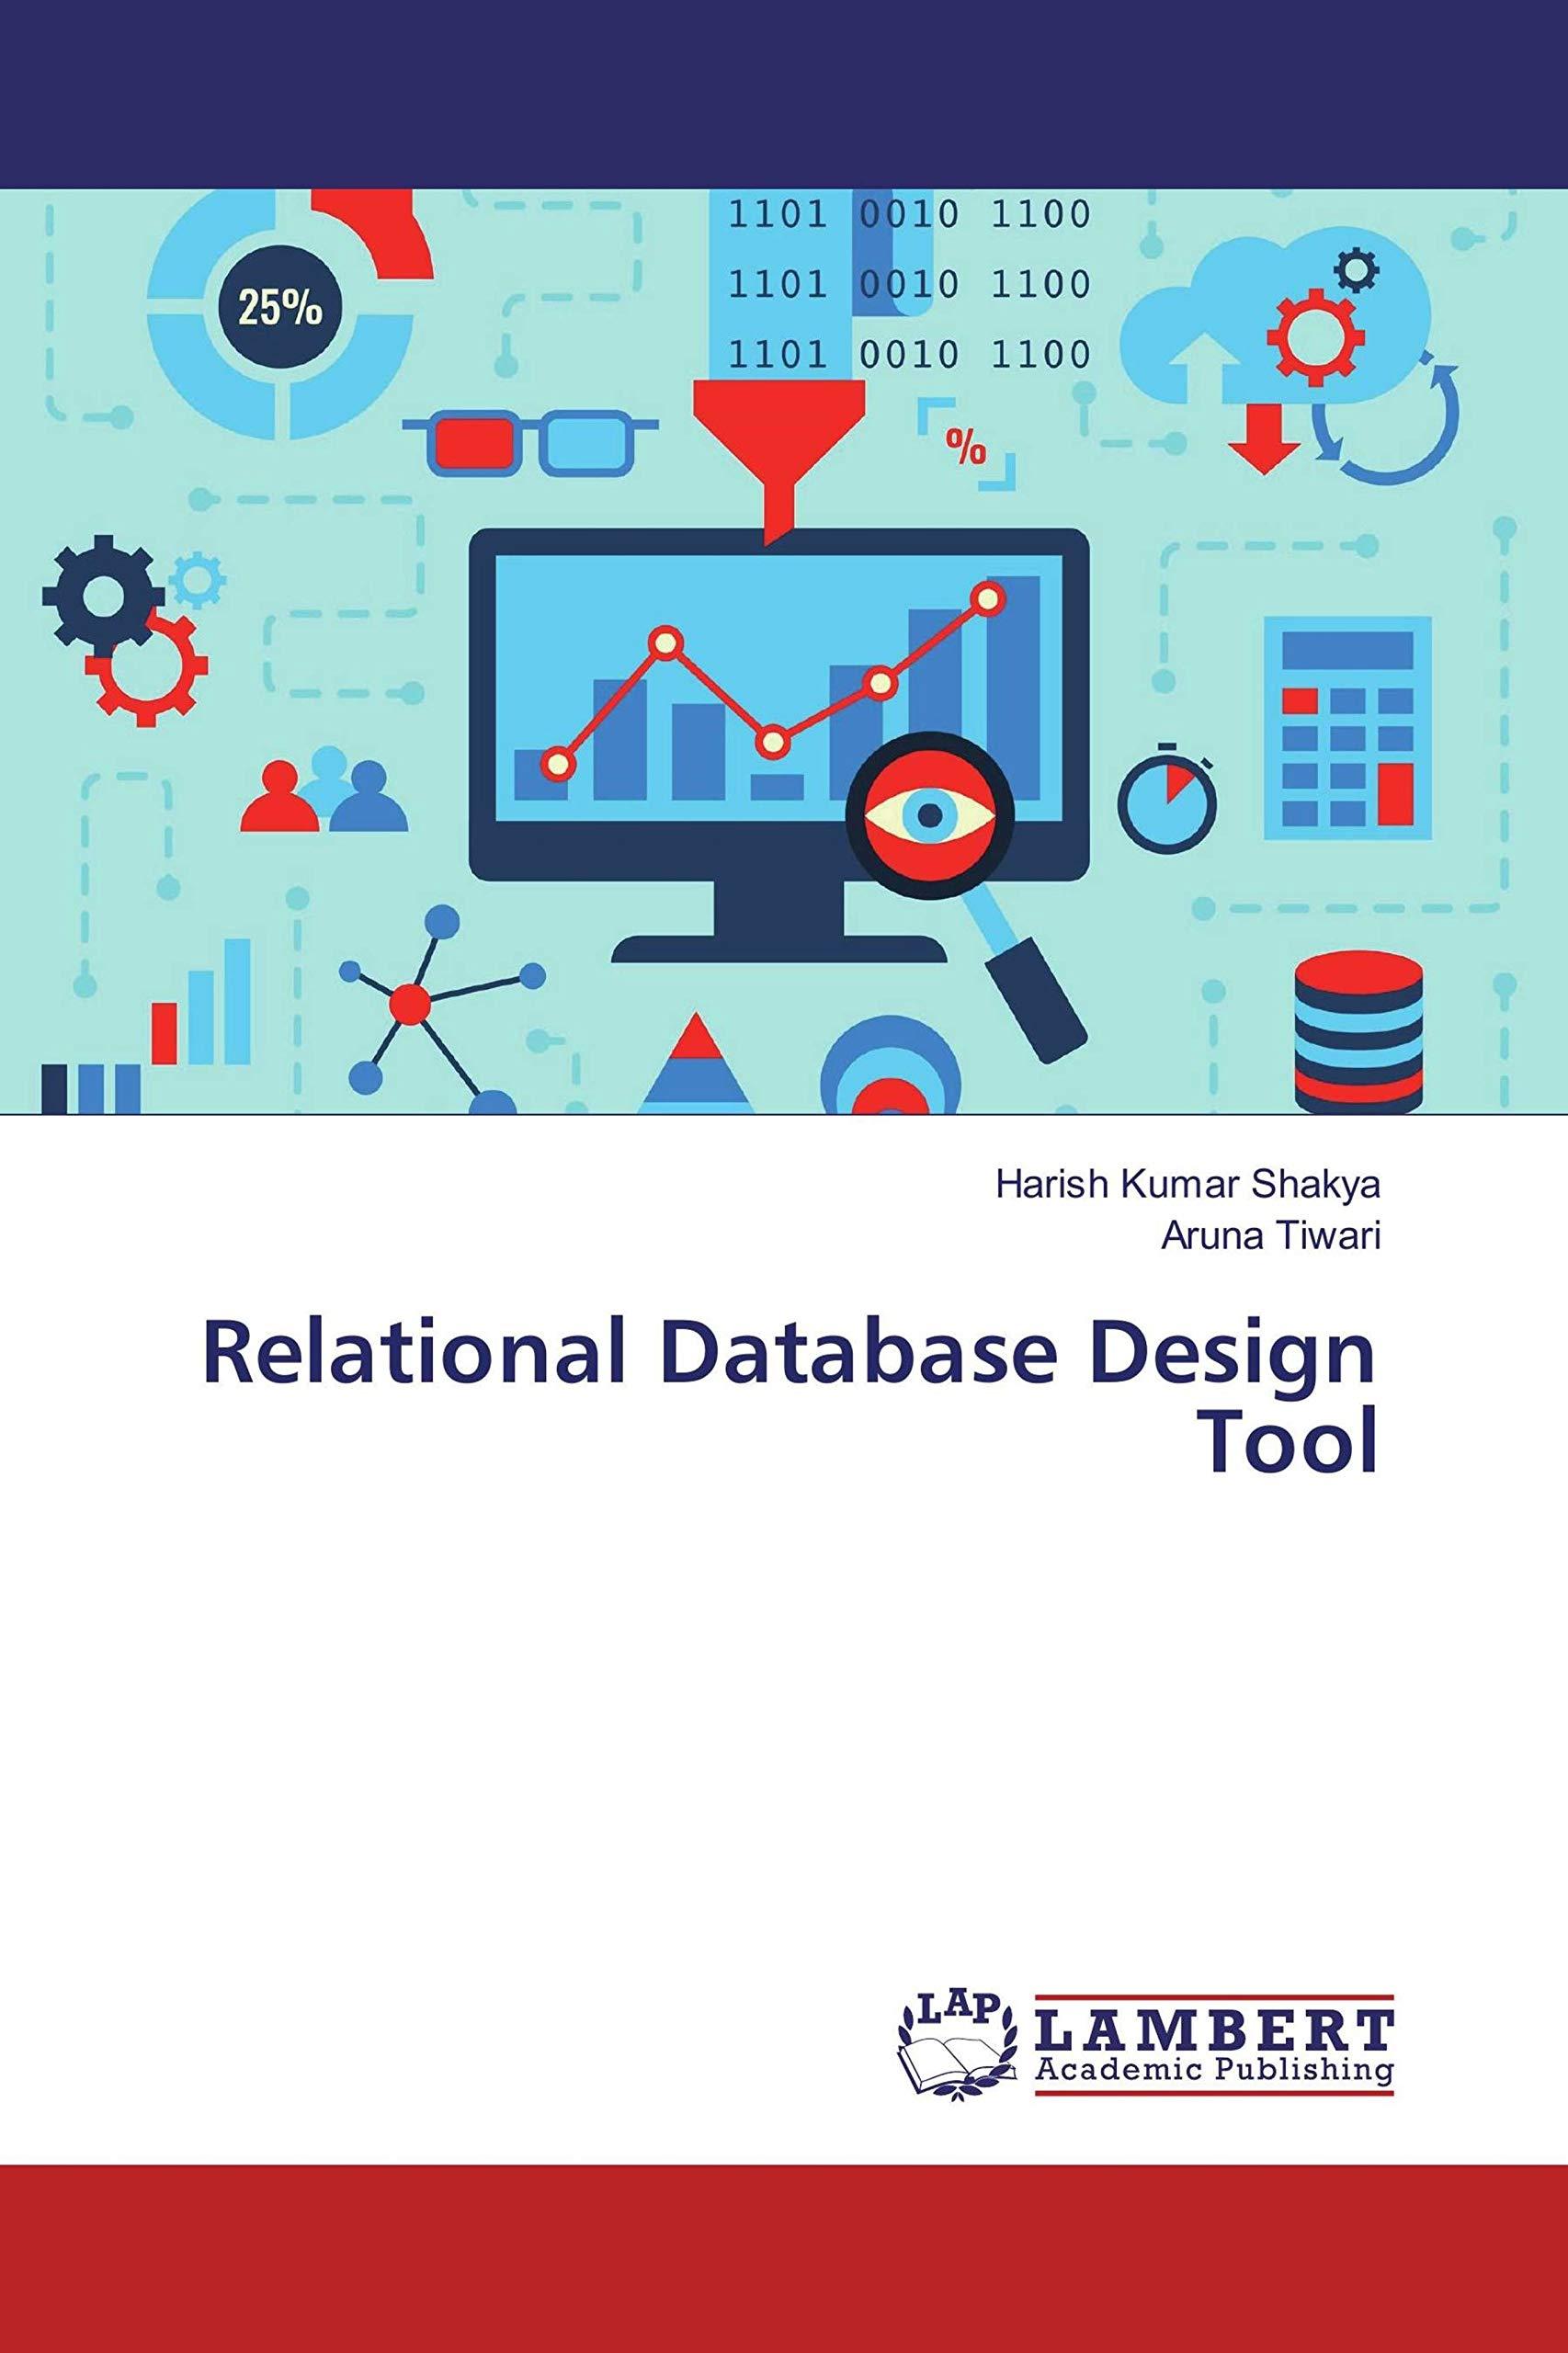 relational database design tool 1st edition harish kumar shakya, aruna tiwari 3659972150, 978-3659972157